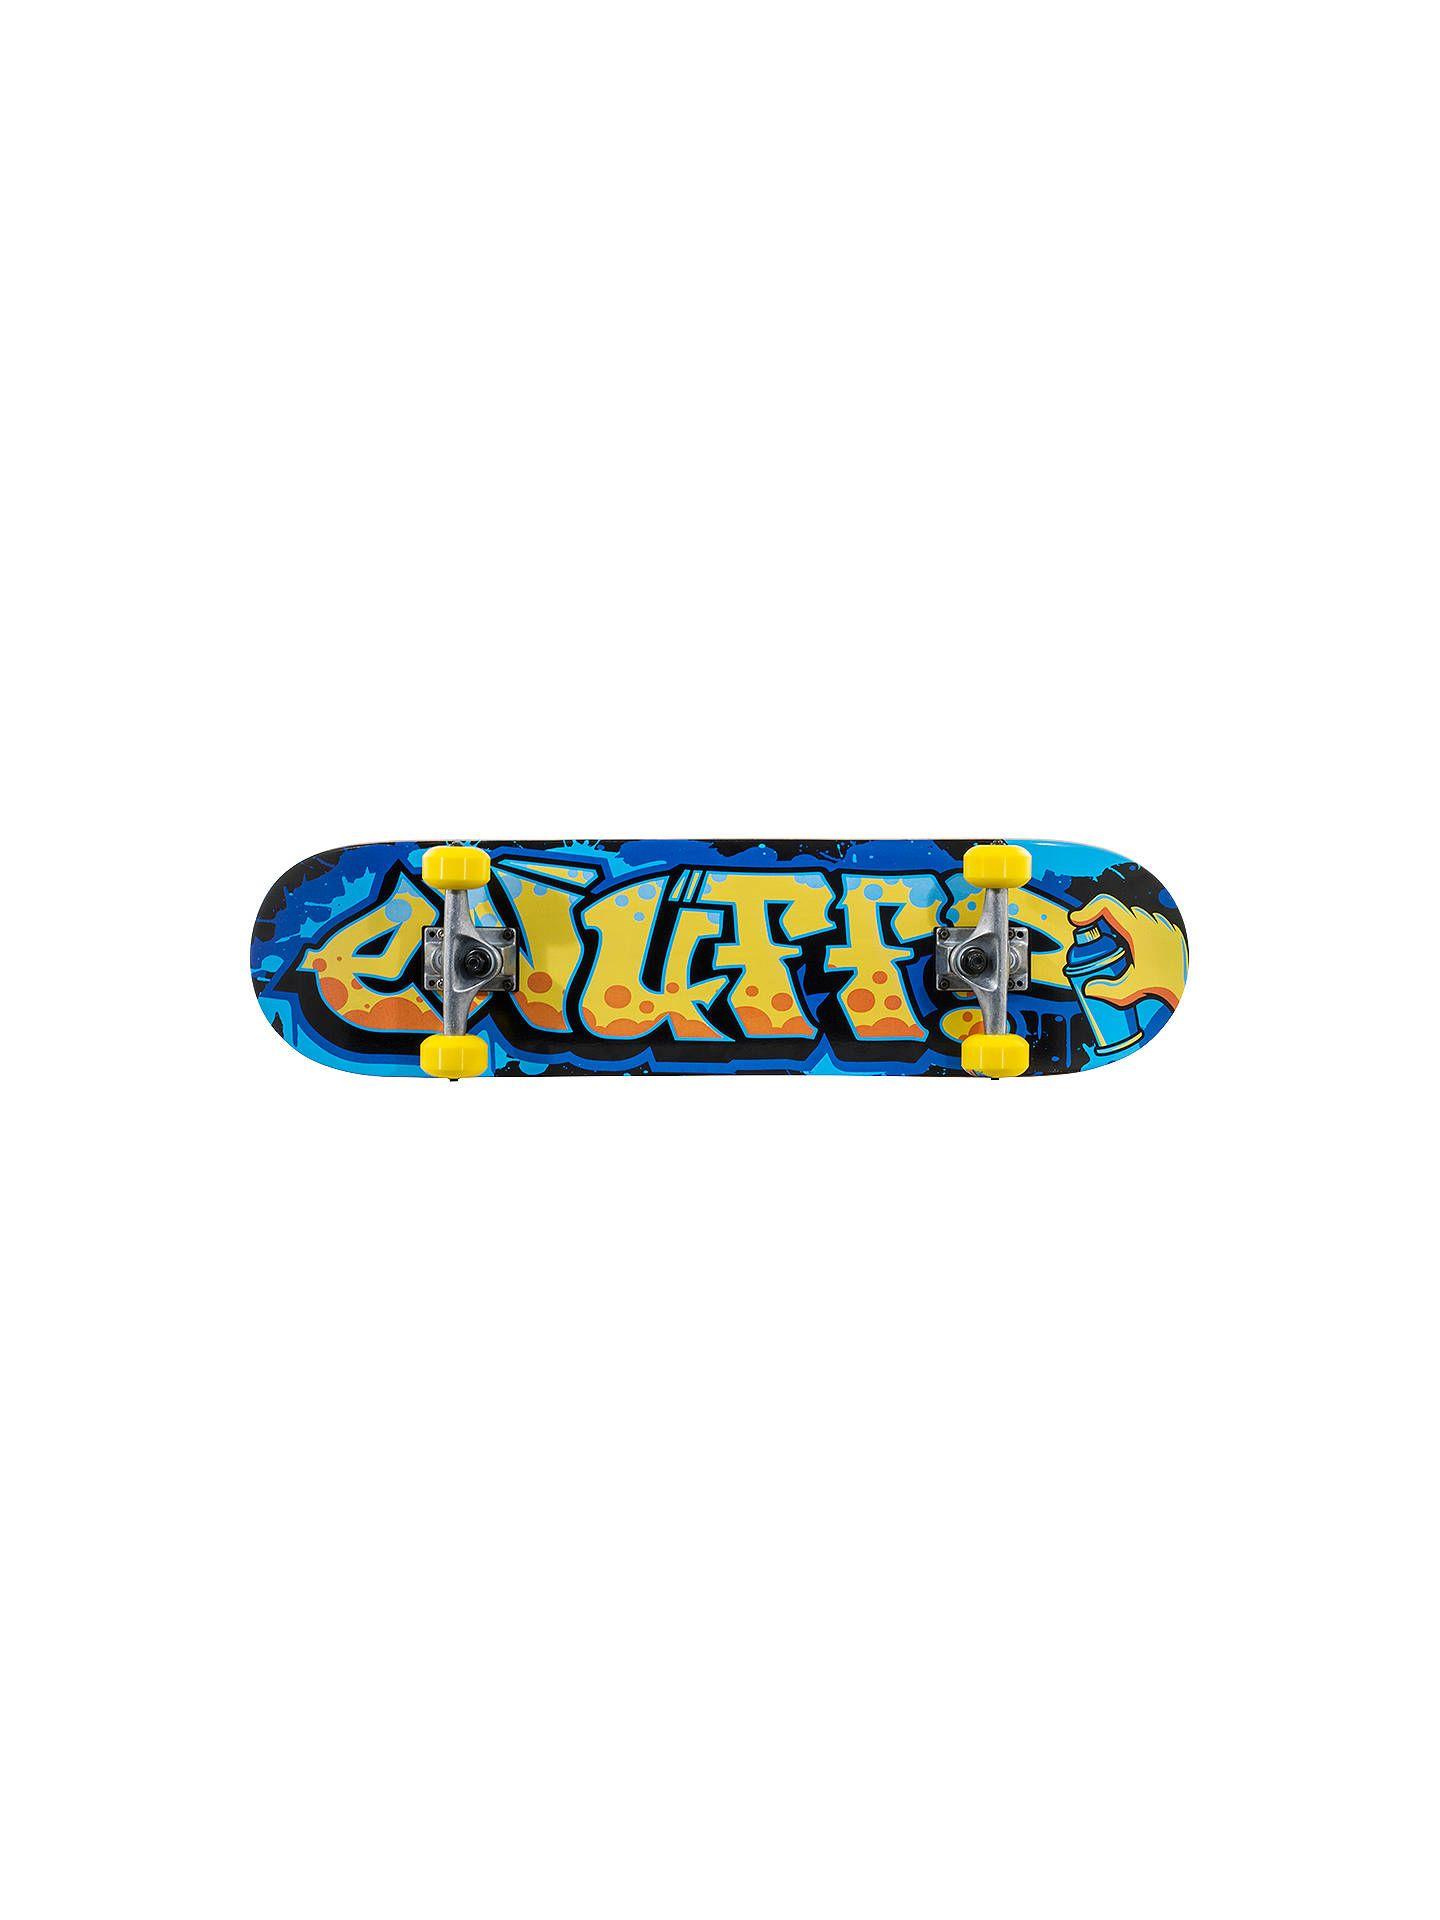 Graffiti Skateboarding Logo - Enuff Graffiti Skateboard, Orange Blue At John Lewis & Partners